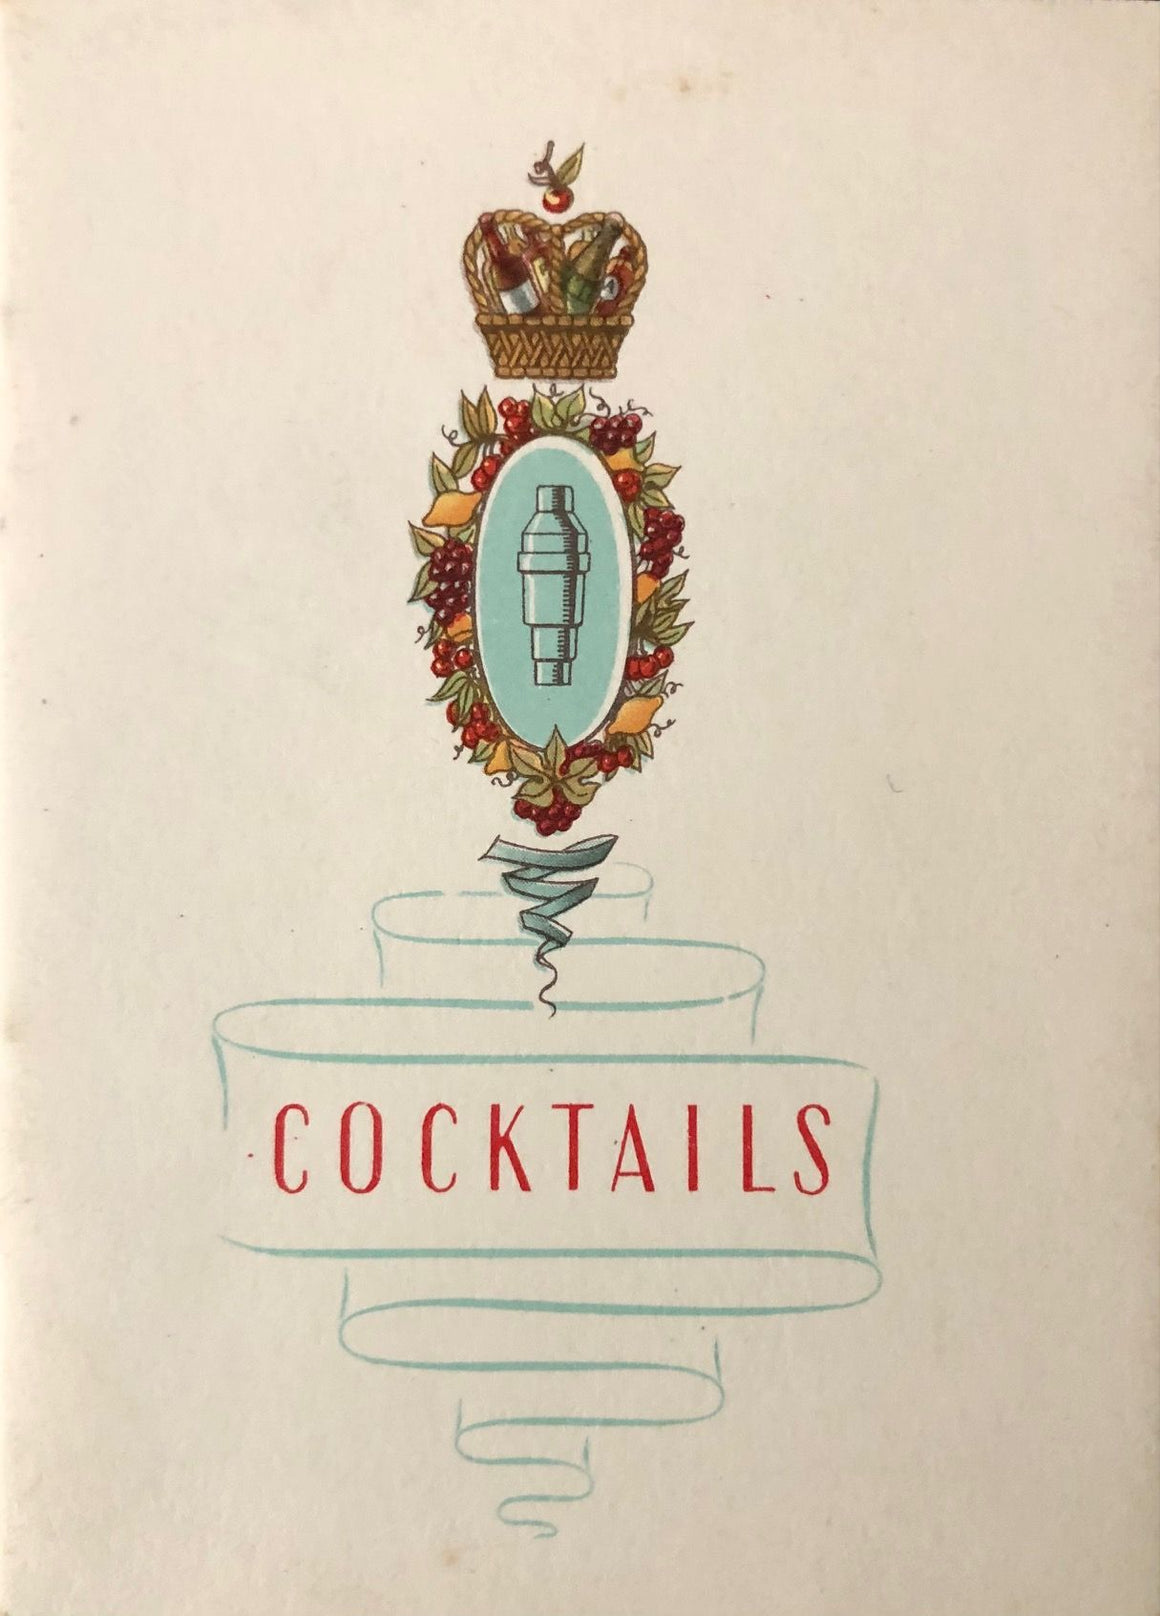 (*NEW ARRIVAL*) (Cocktails) Cocktails.